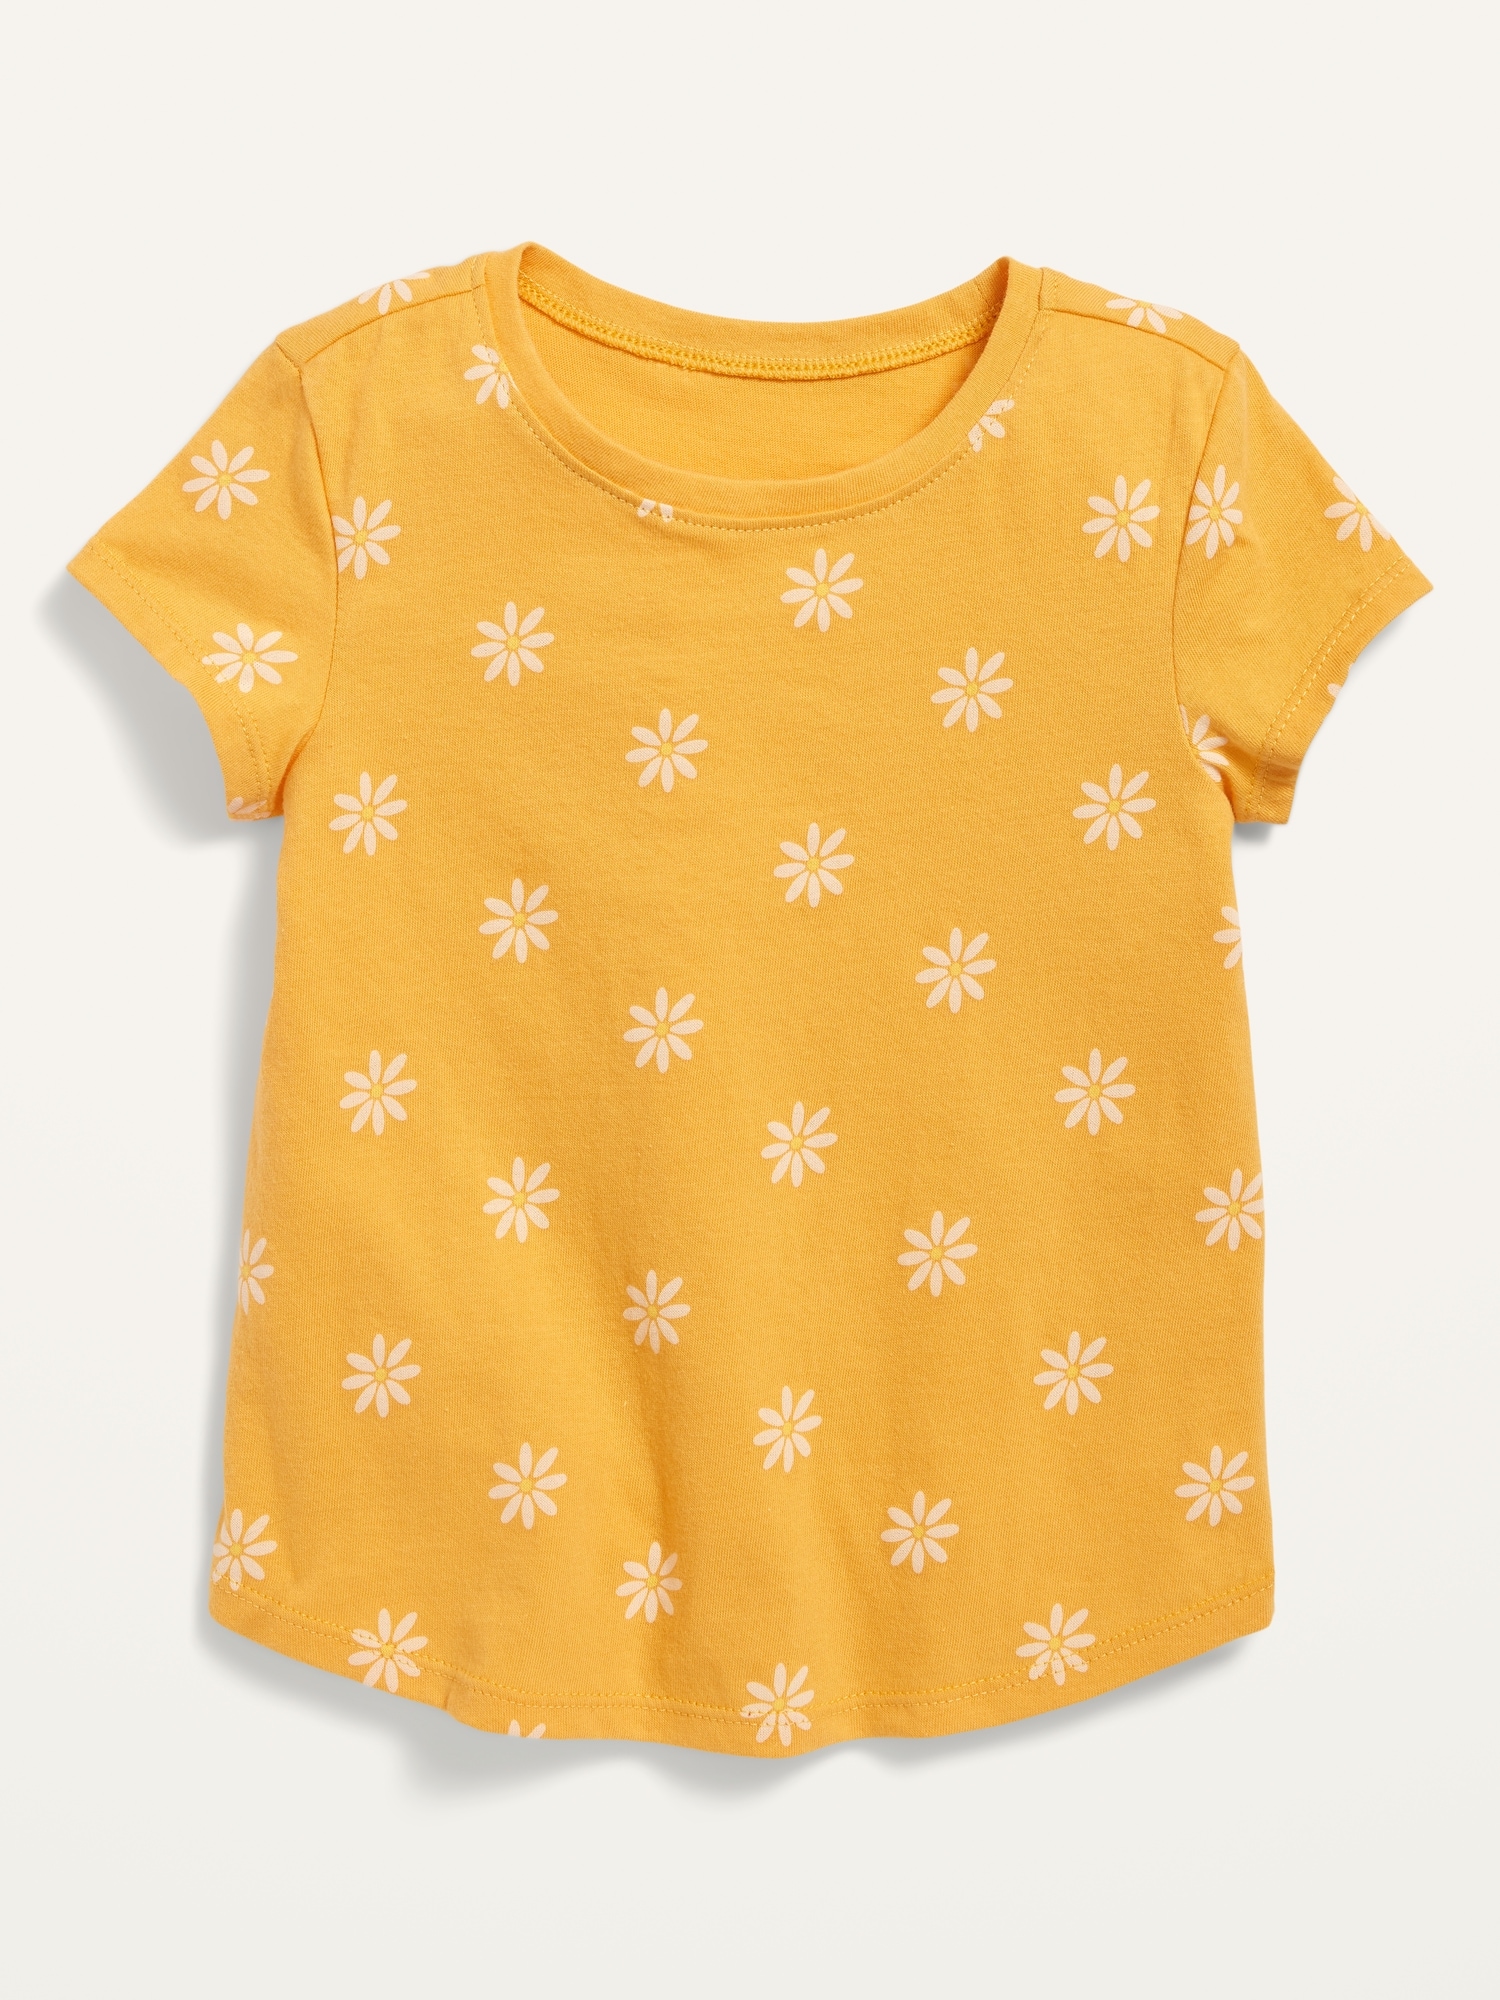 Unisex Short-Sleeve Printed Tee for Toddler